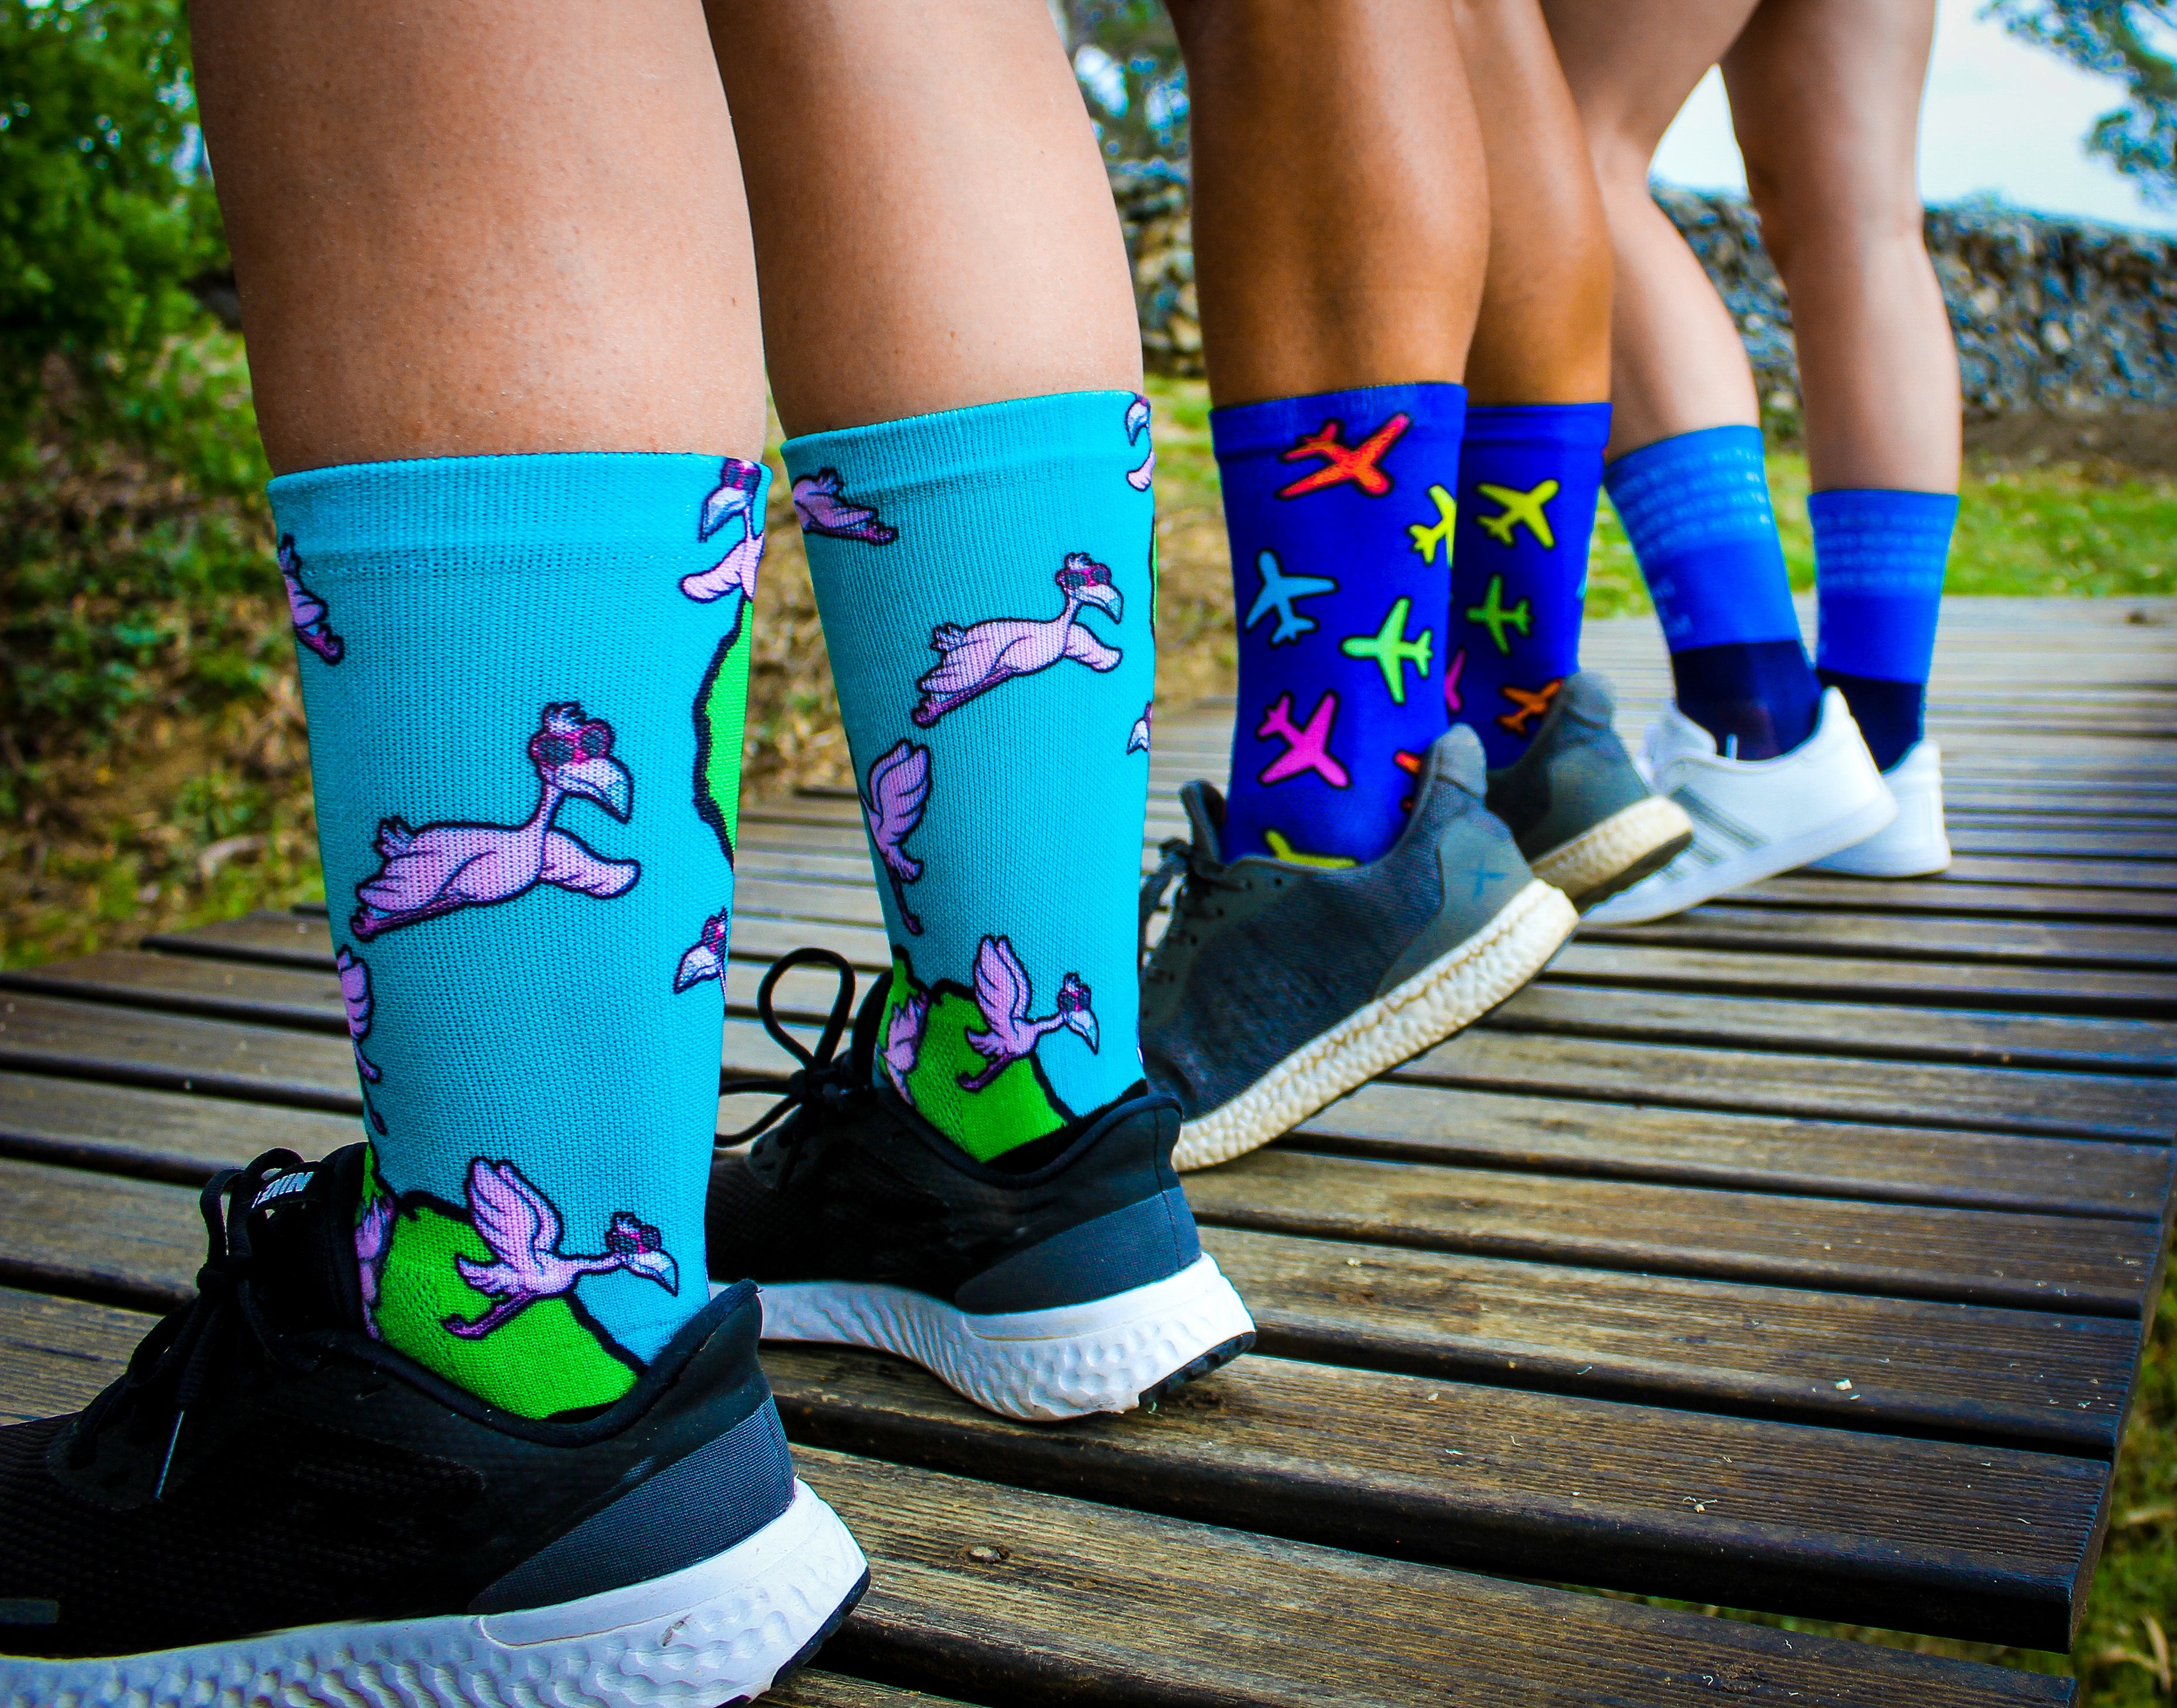 Flamingo Socks, Aeroplane Socks and Living the dream socks on a wooden bridge